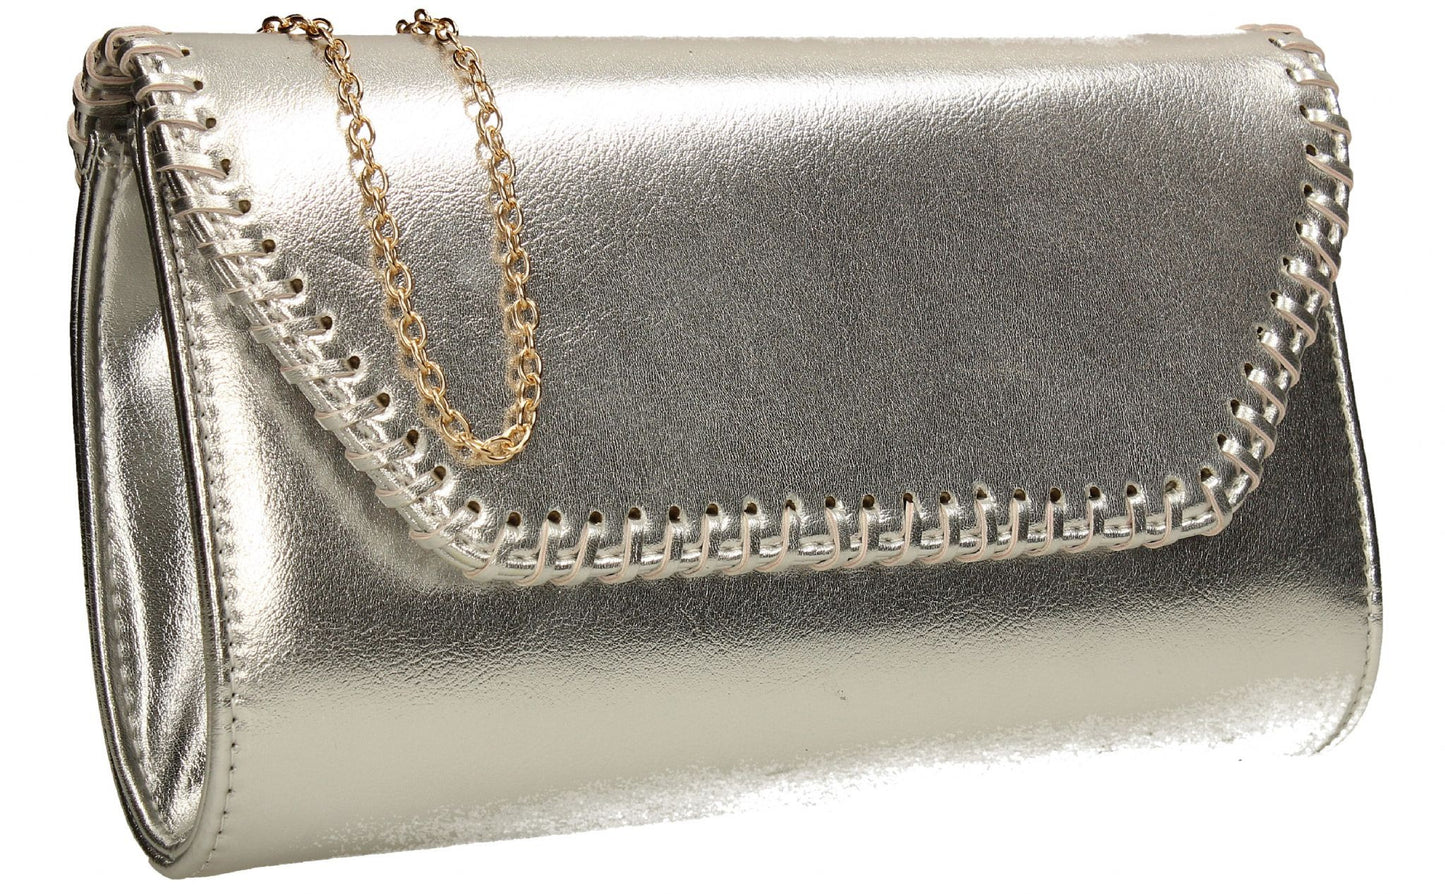 SWANKYSWANS Miller Clutch Bag Silver Cute Cheap Clutch Bag For Weddings School and Work